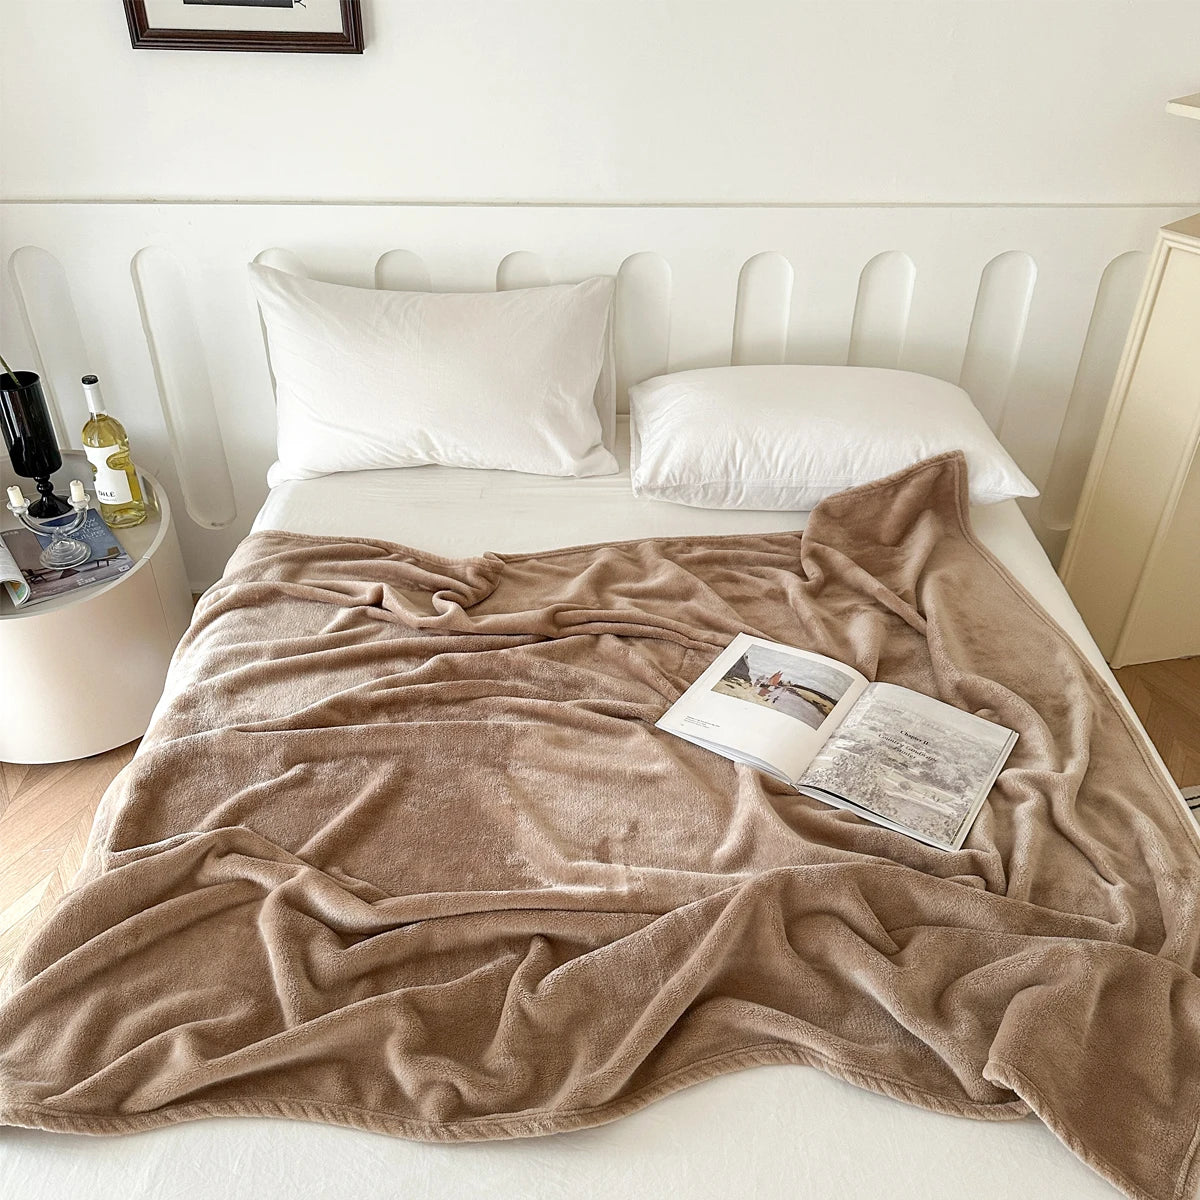 Bucephalus Flannel Throw Blankets, Fuzzy Super Soft Comfy and Cozy Luxury Flannel Throw Blankets for Couch Sofa,Black Gray Khaki